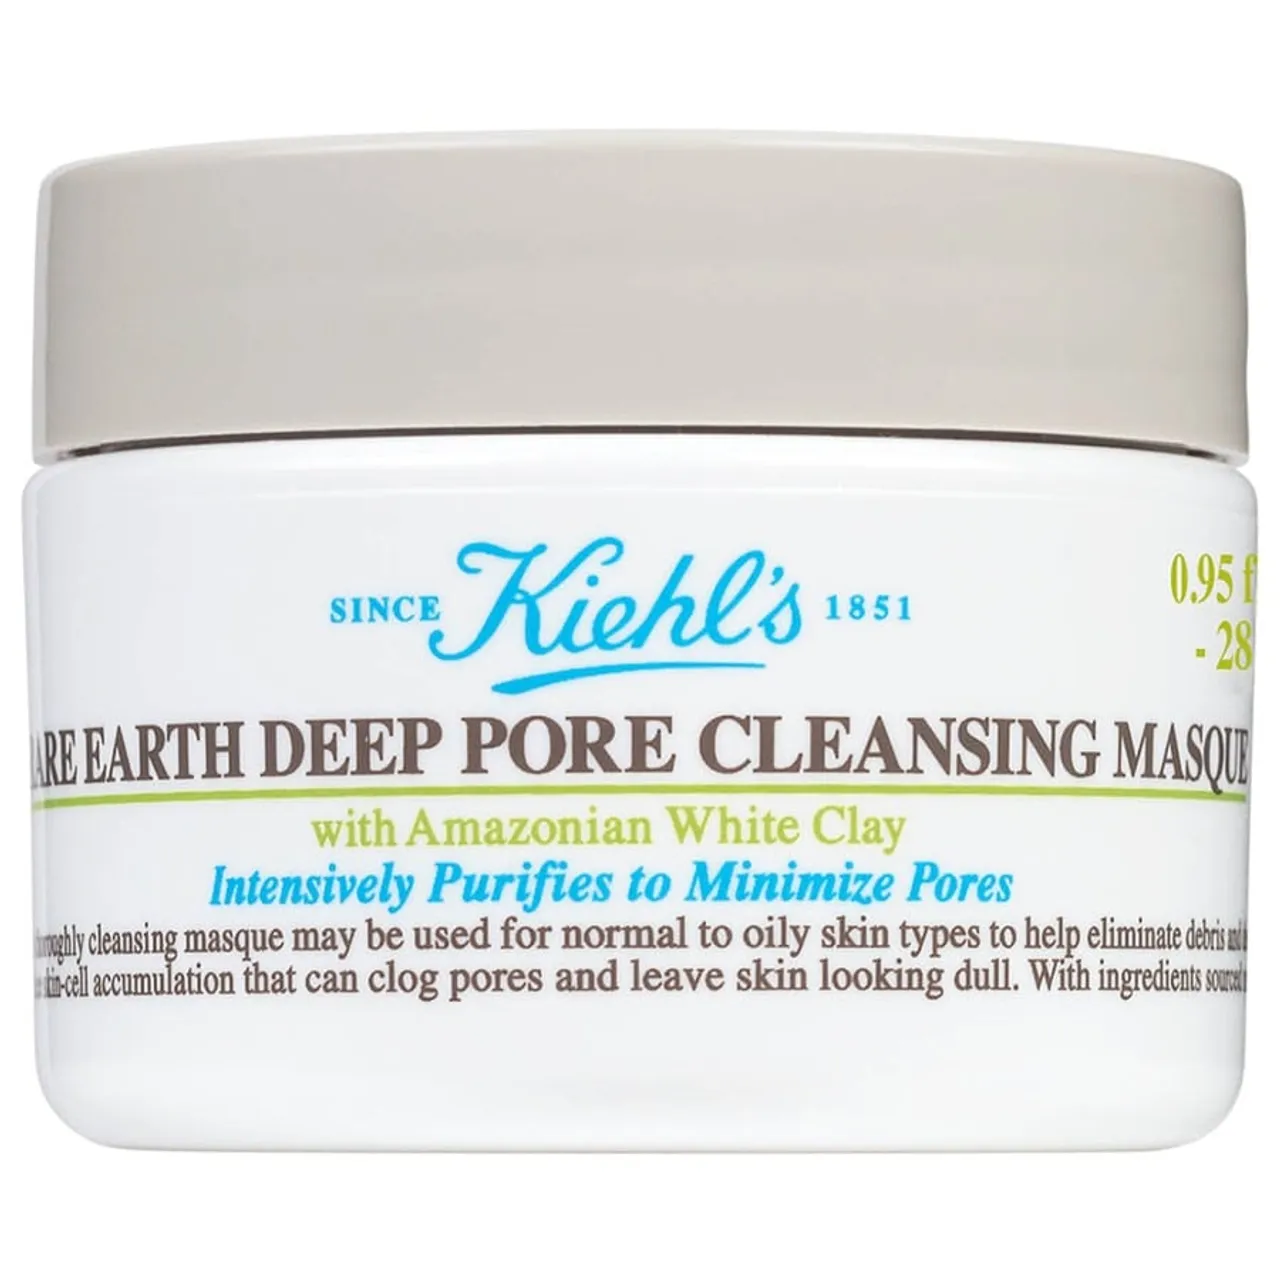 Rare Earth Deep Pore Cleansing Masque